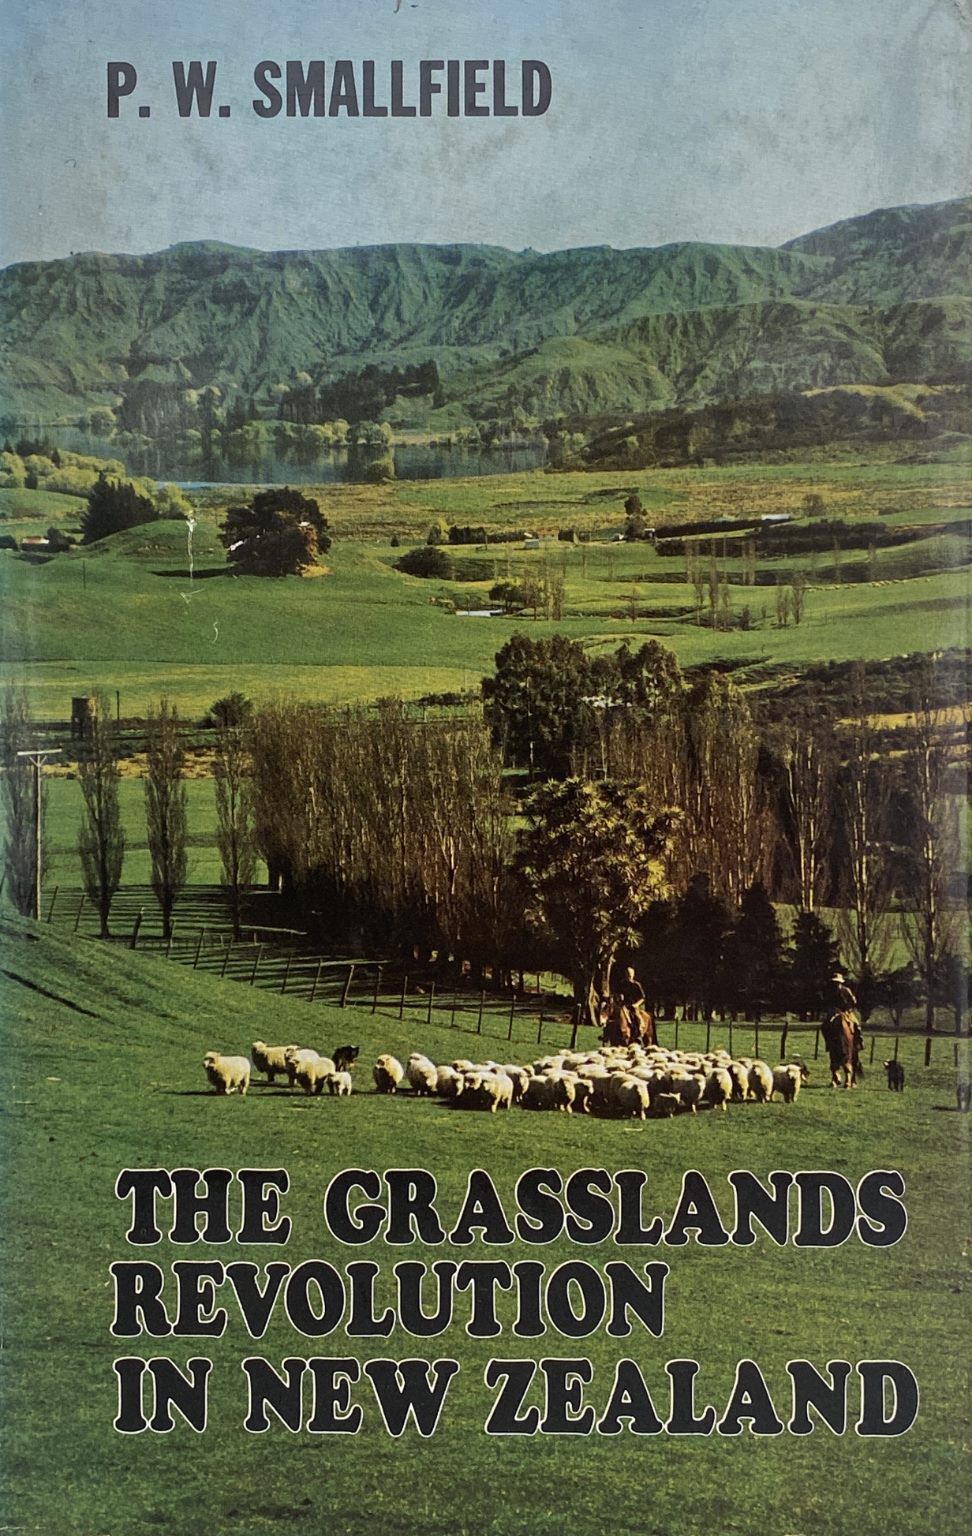 THE GRASSLANDS REVOLUTION IN NEW ZEALAND